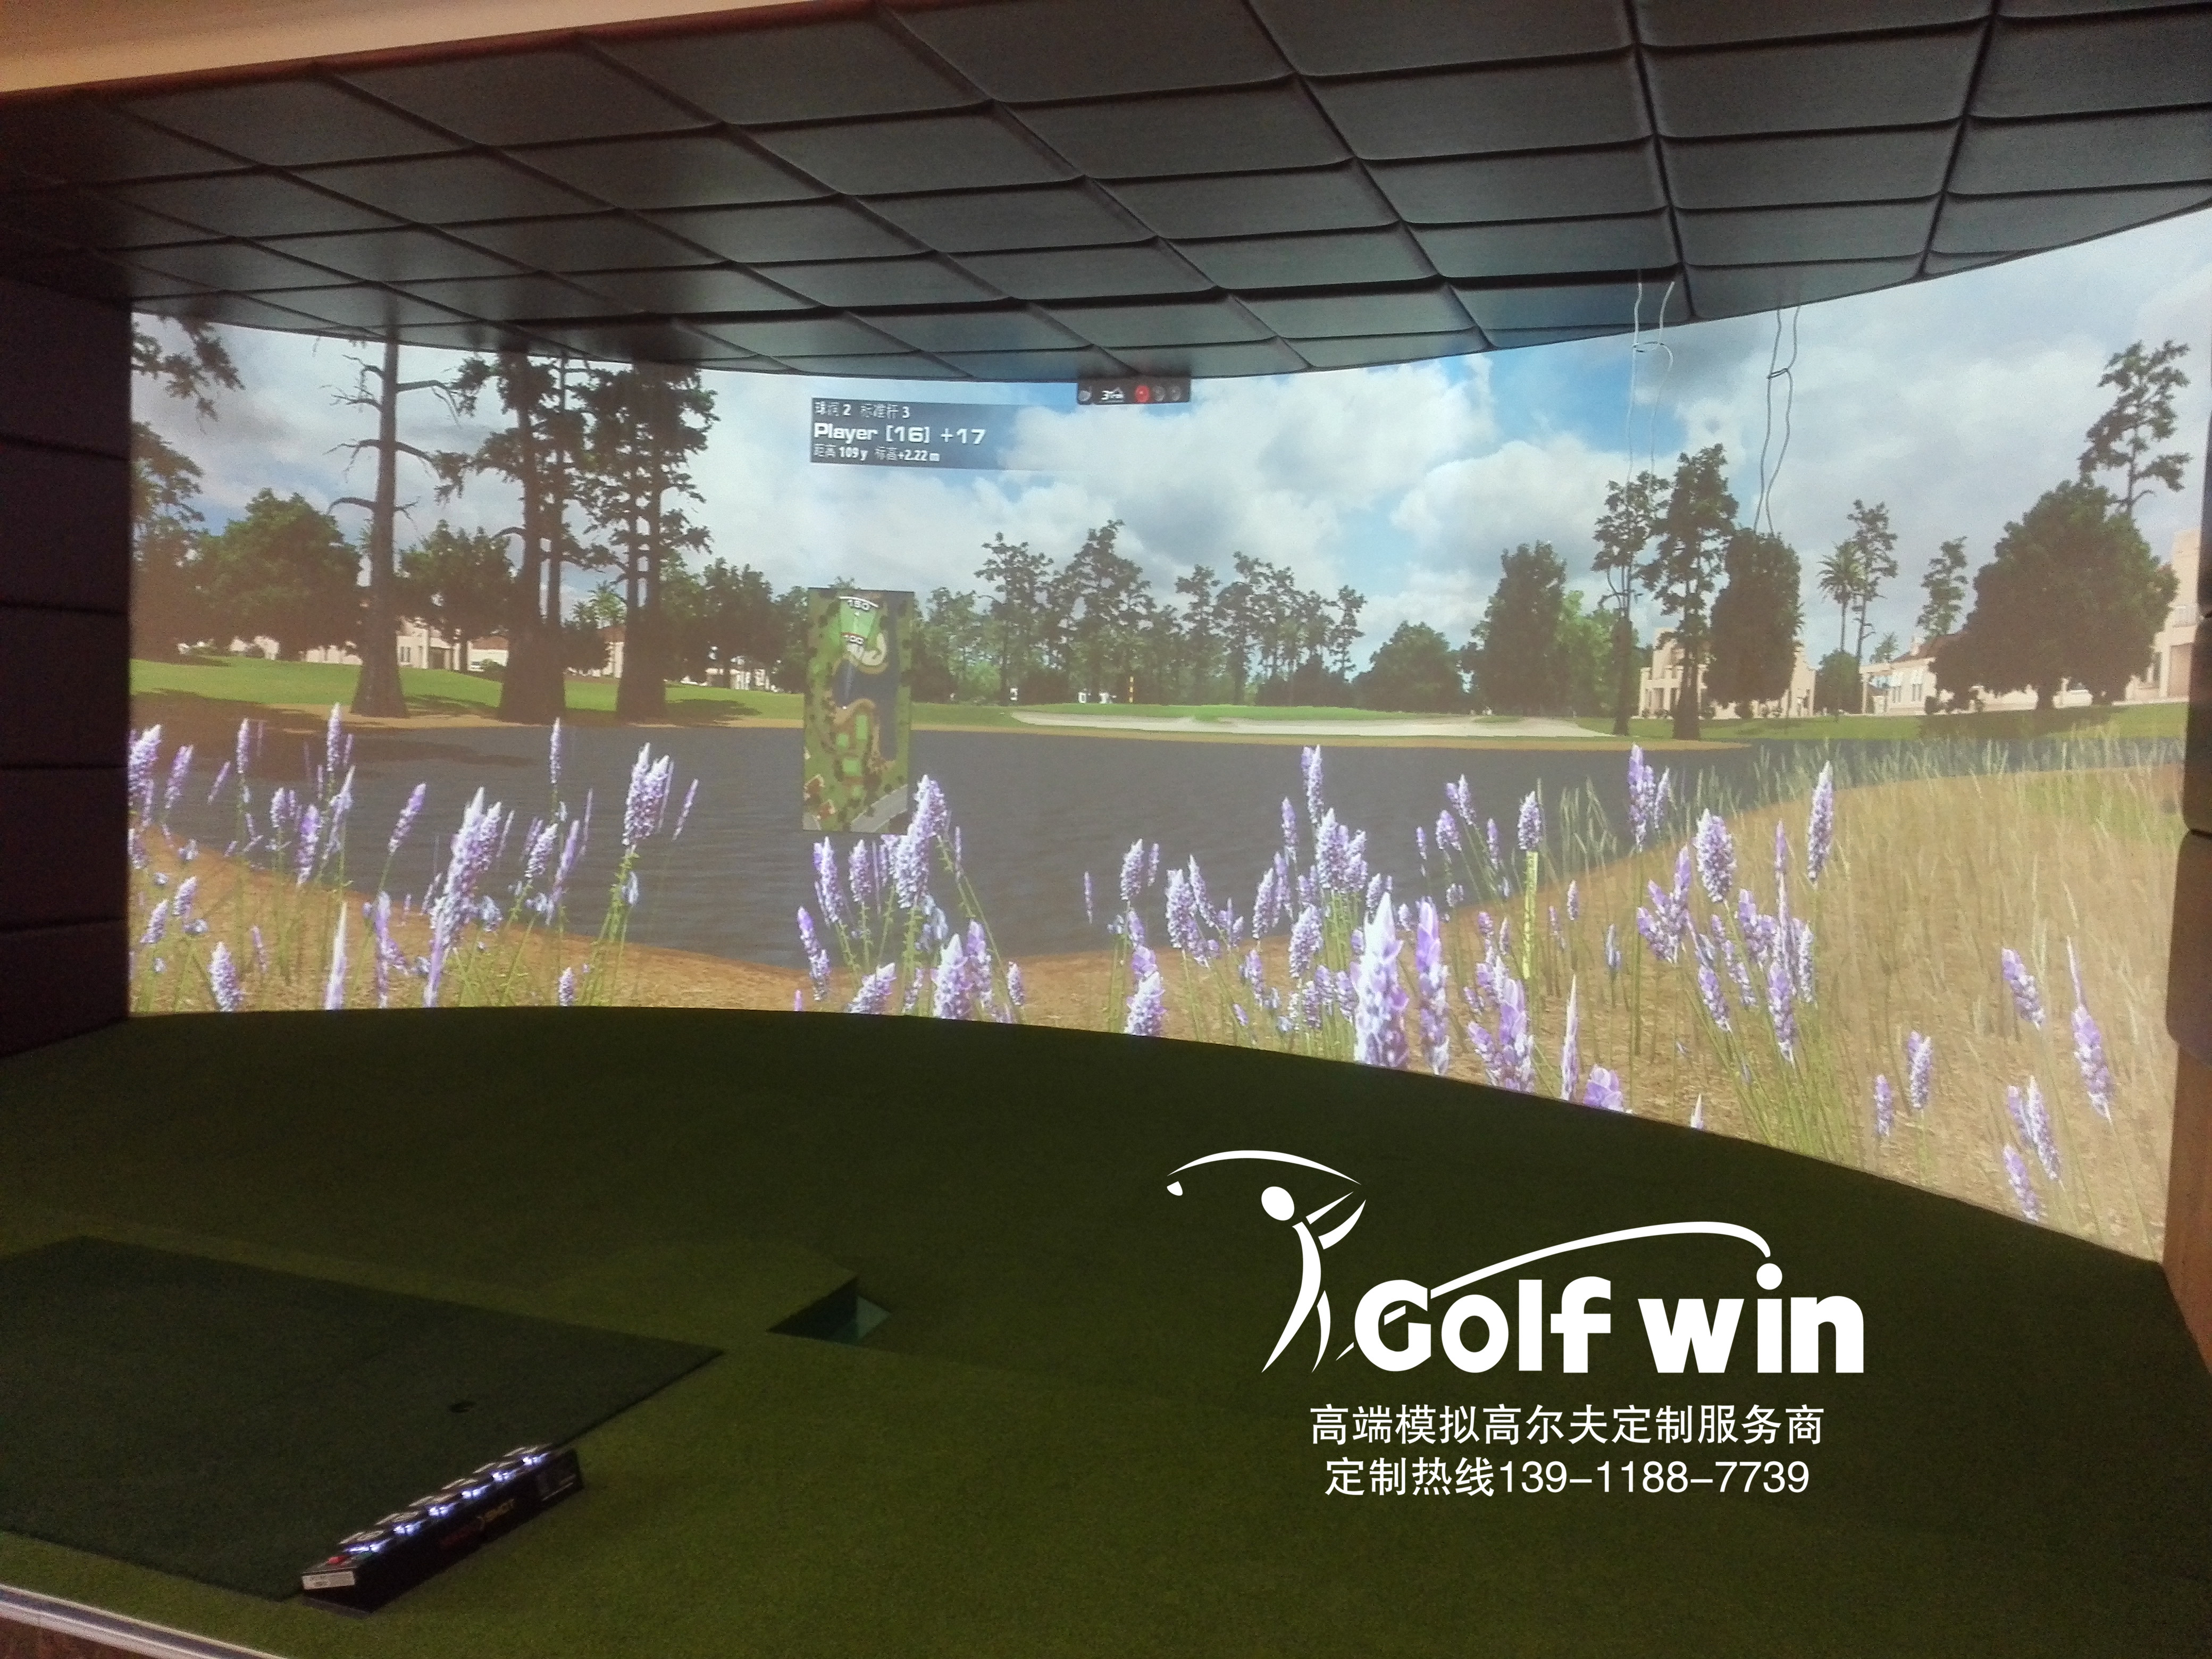 Golfwin/G6 尊享版高清模擬高爾夫